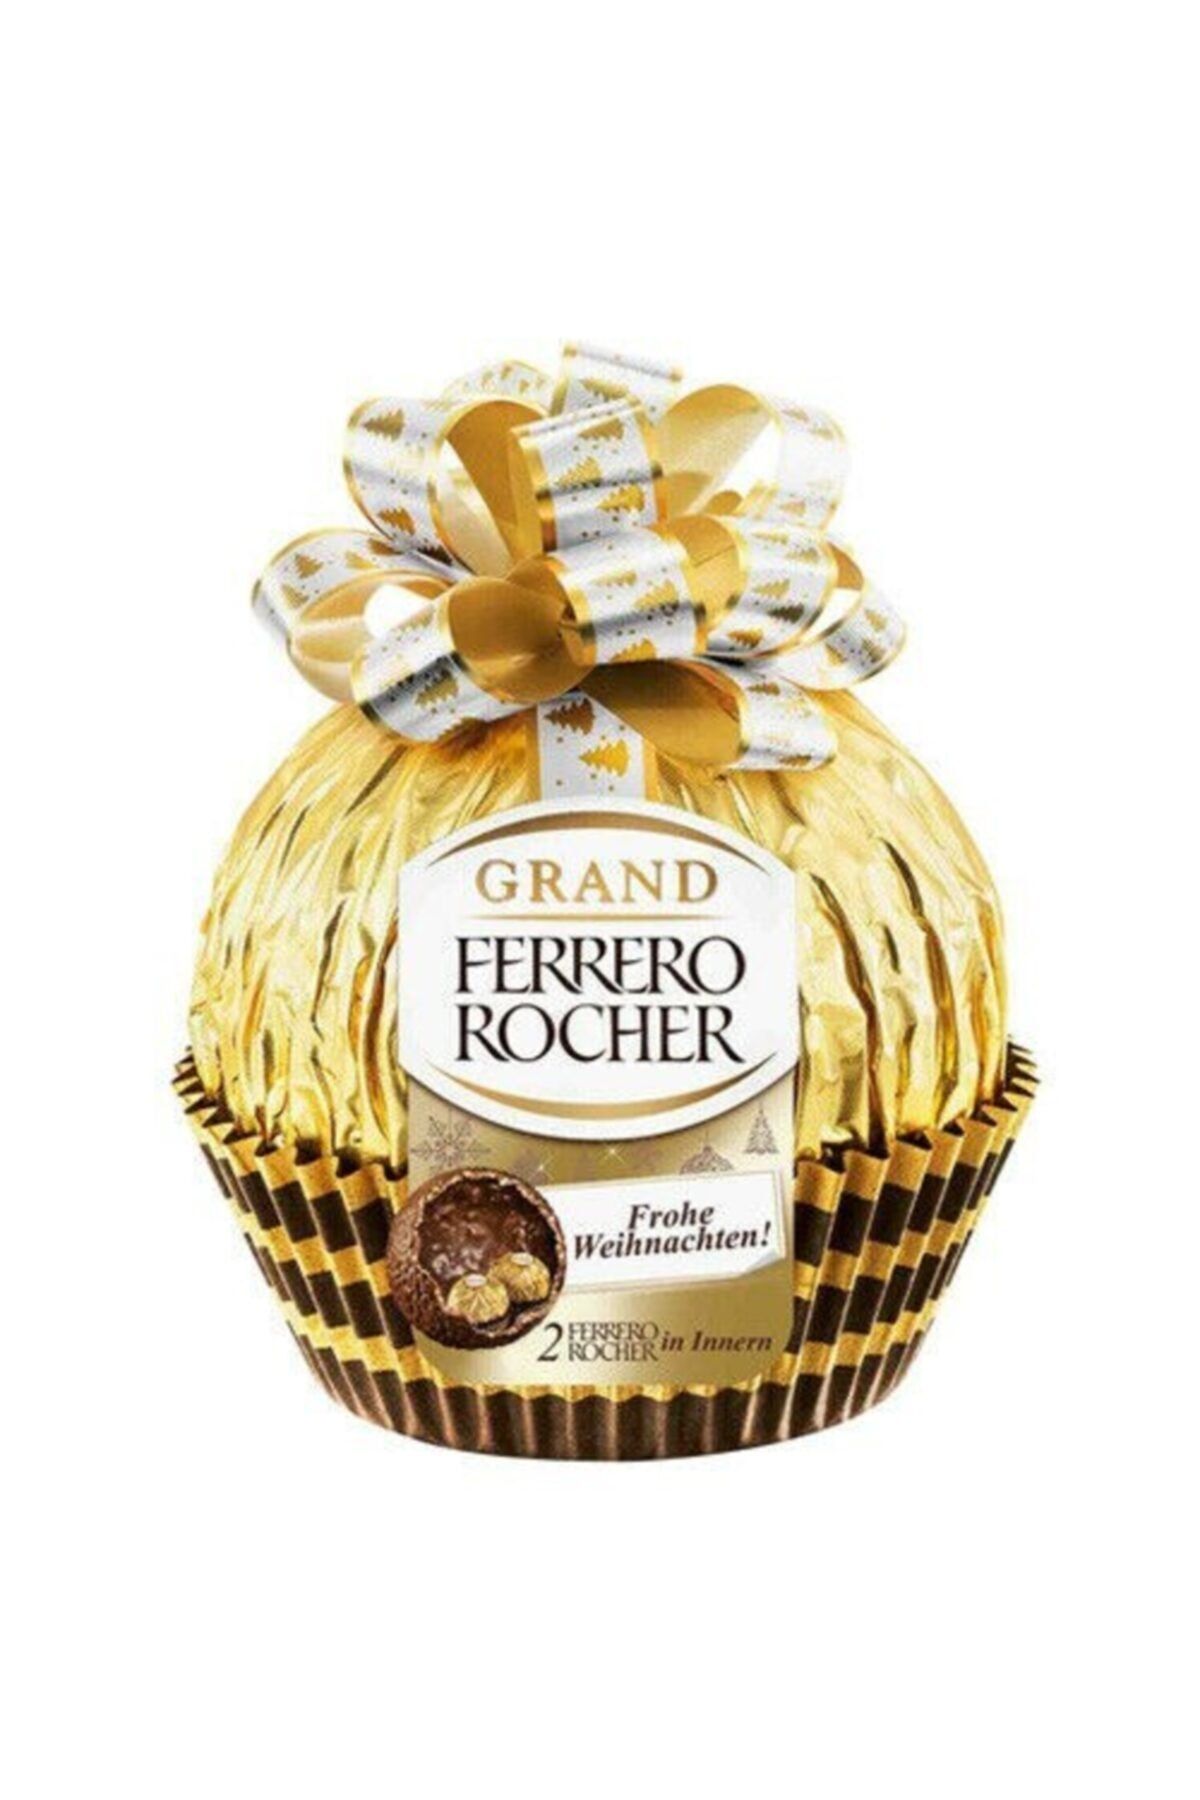 Ferrero шампанское. Ферреро Роше. Ферреро Роше Grand. Ferrero Rocher шоколад. Конфеты Ferrero Rocher Grand 125 г.